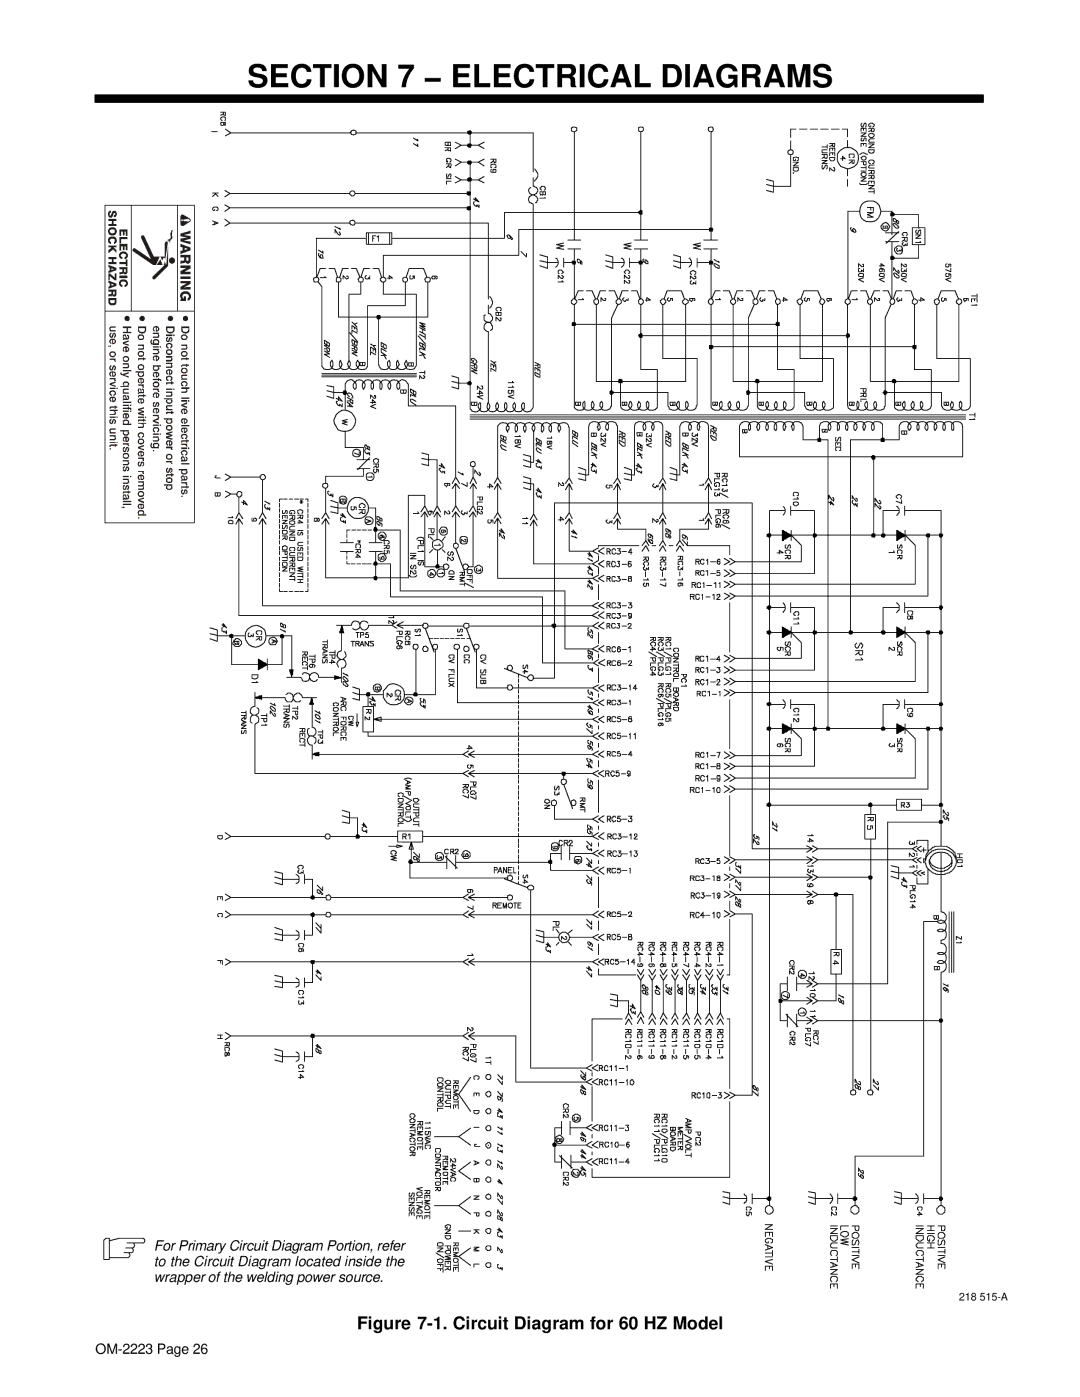 Miller Electric 1250, 1000 manual Electrical Diagrams, Circuit Diagram for 60 HZ Model 